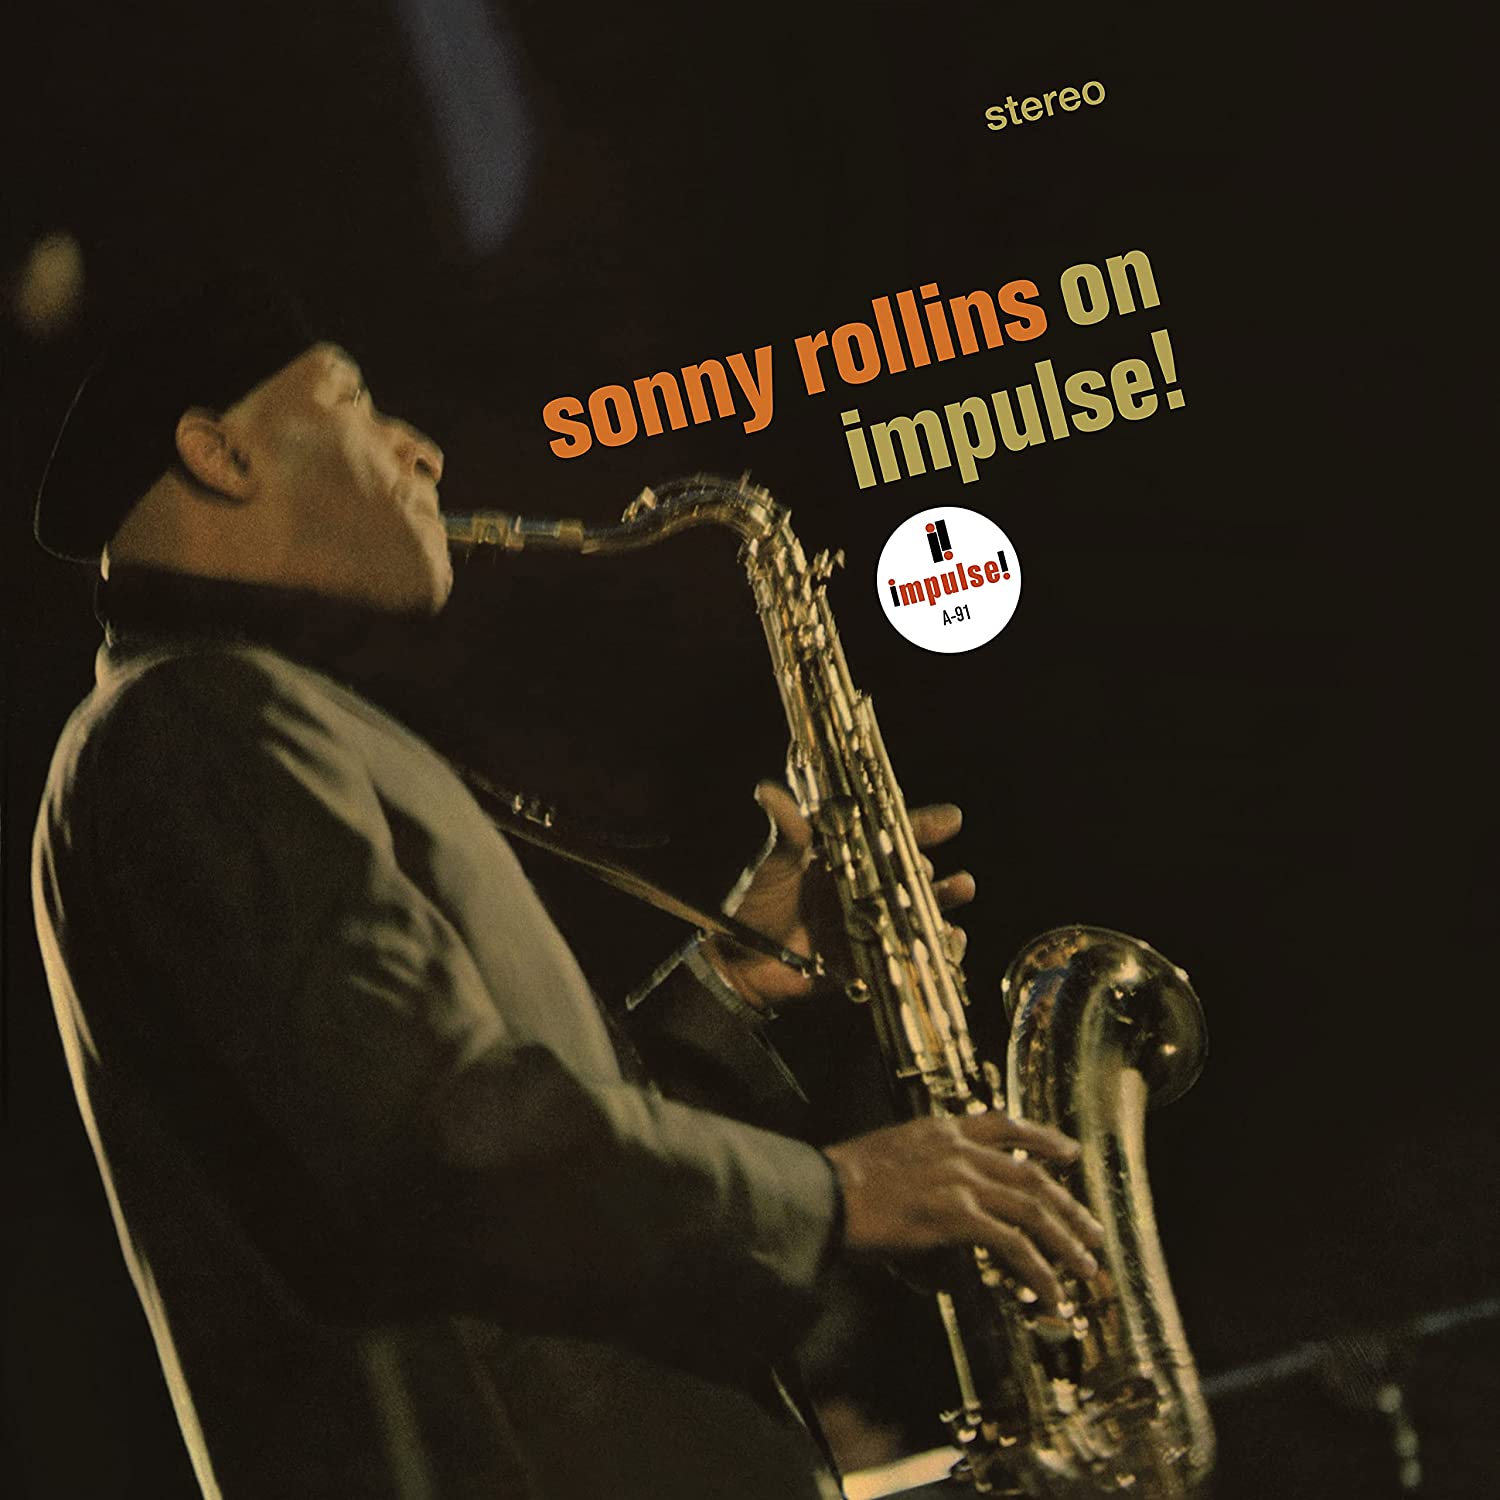 SONNY ROLLINS - On Impulse! (Verve Acoustic Series Remastered Ed.) - LP - 180g Vinyl